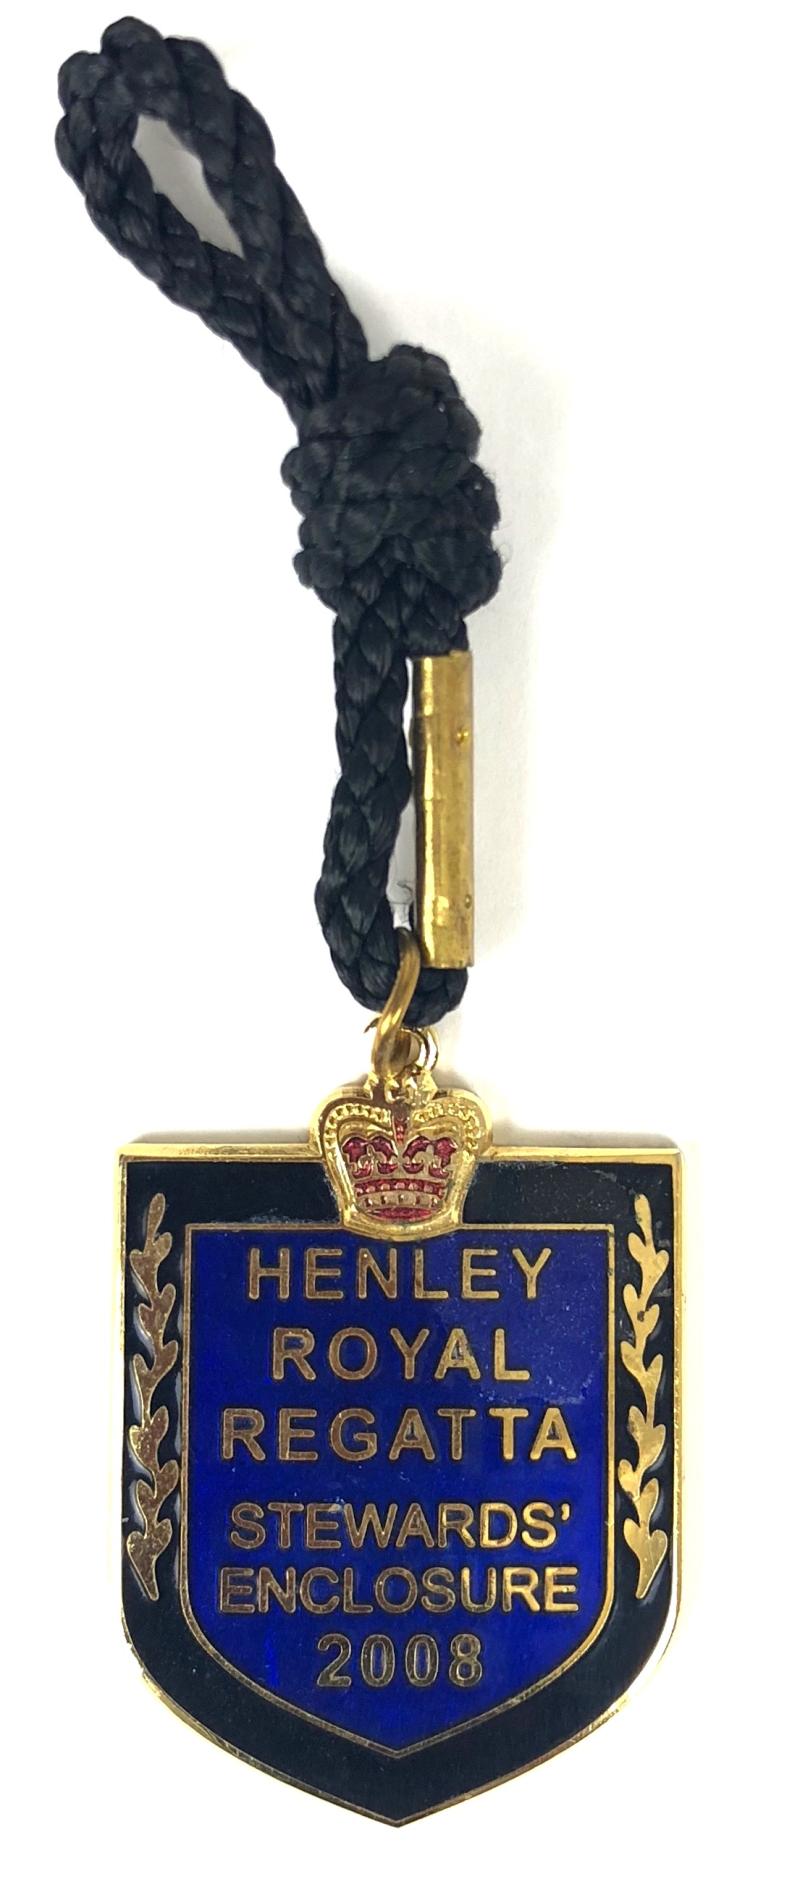 2008 Henley Royal Regatta stewards enclosure badge